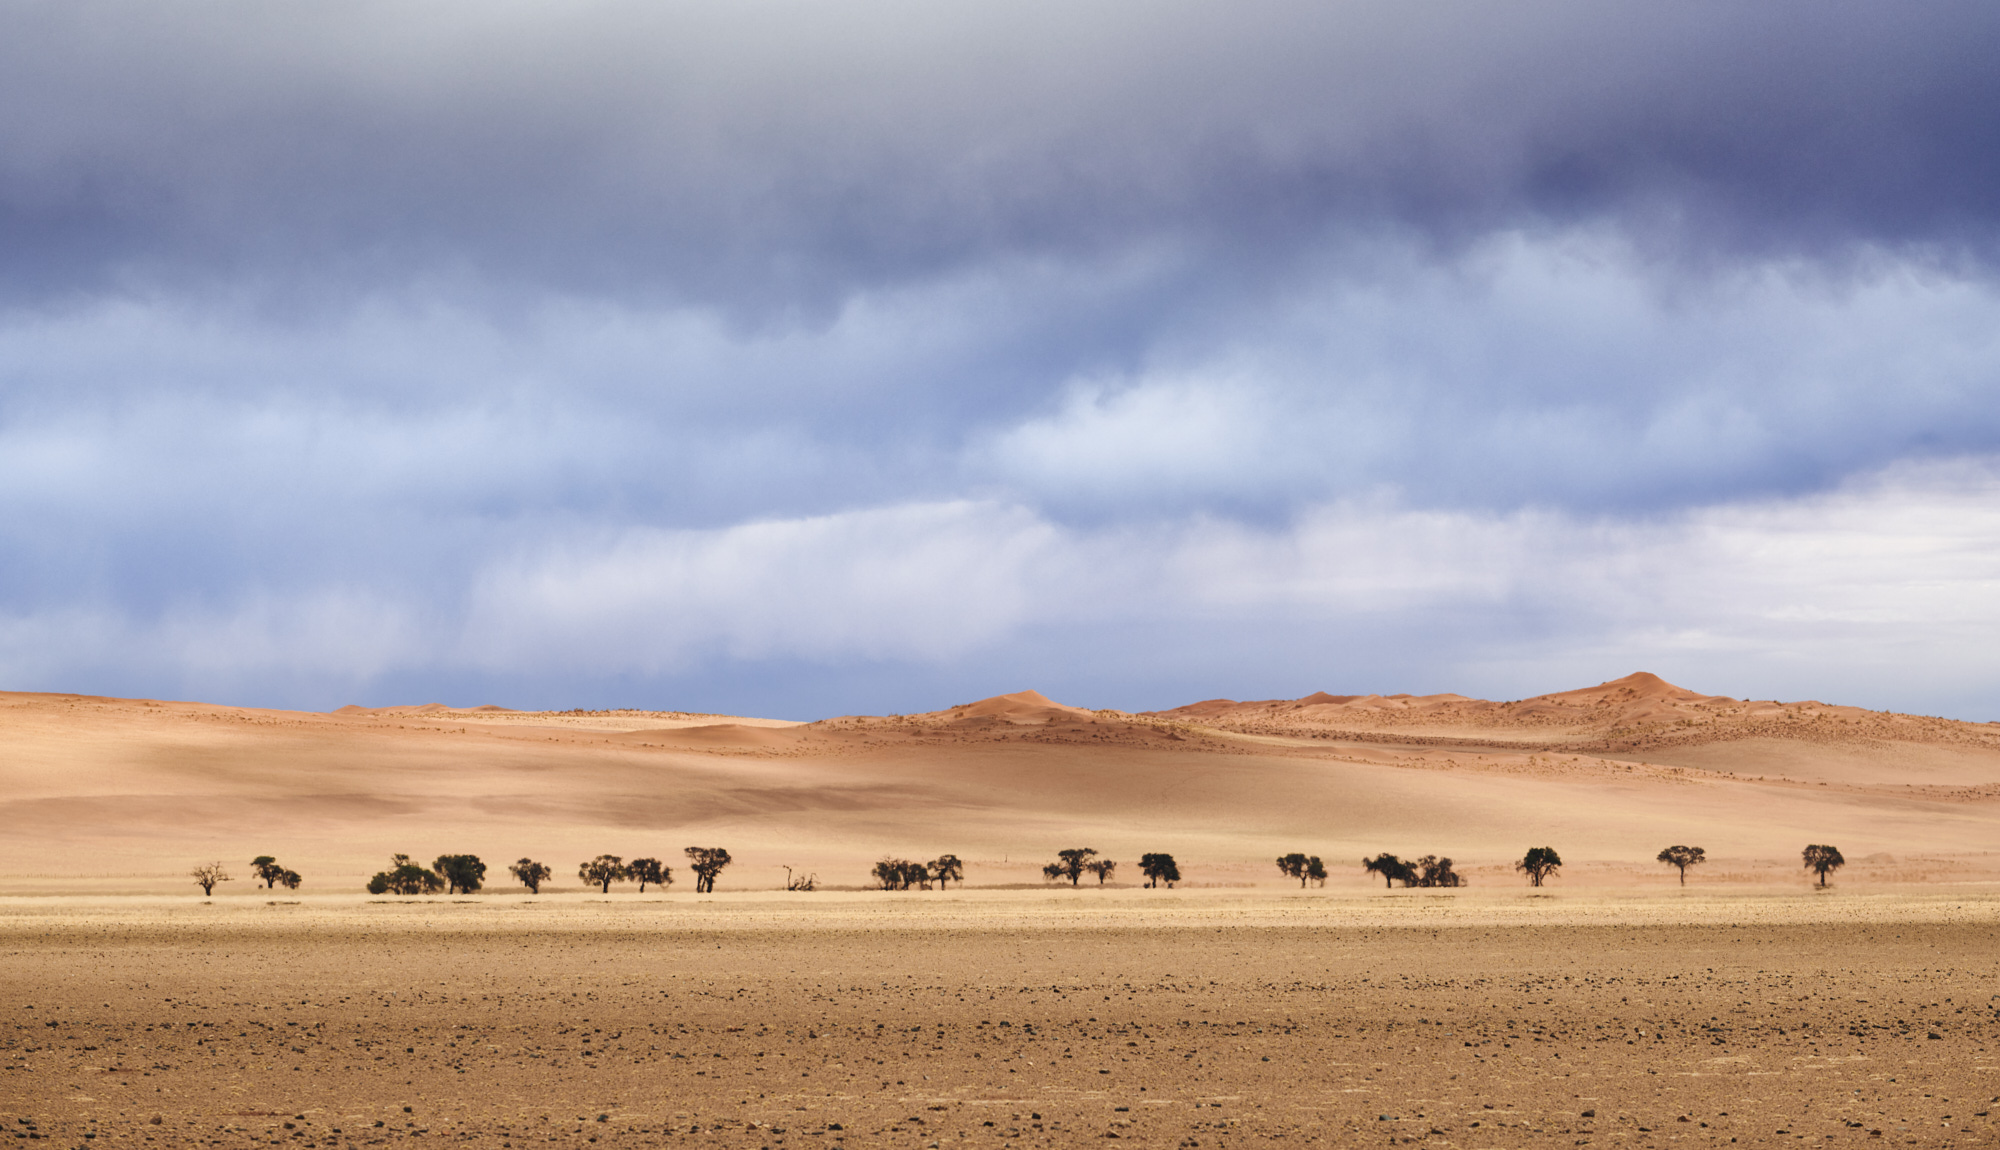 a landscape photo of a desert